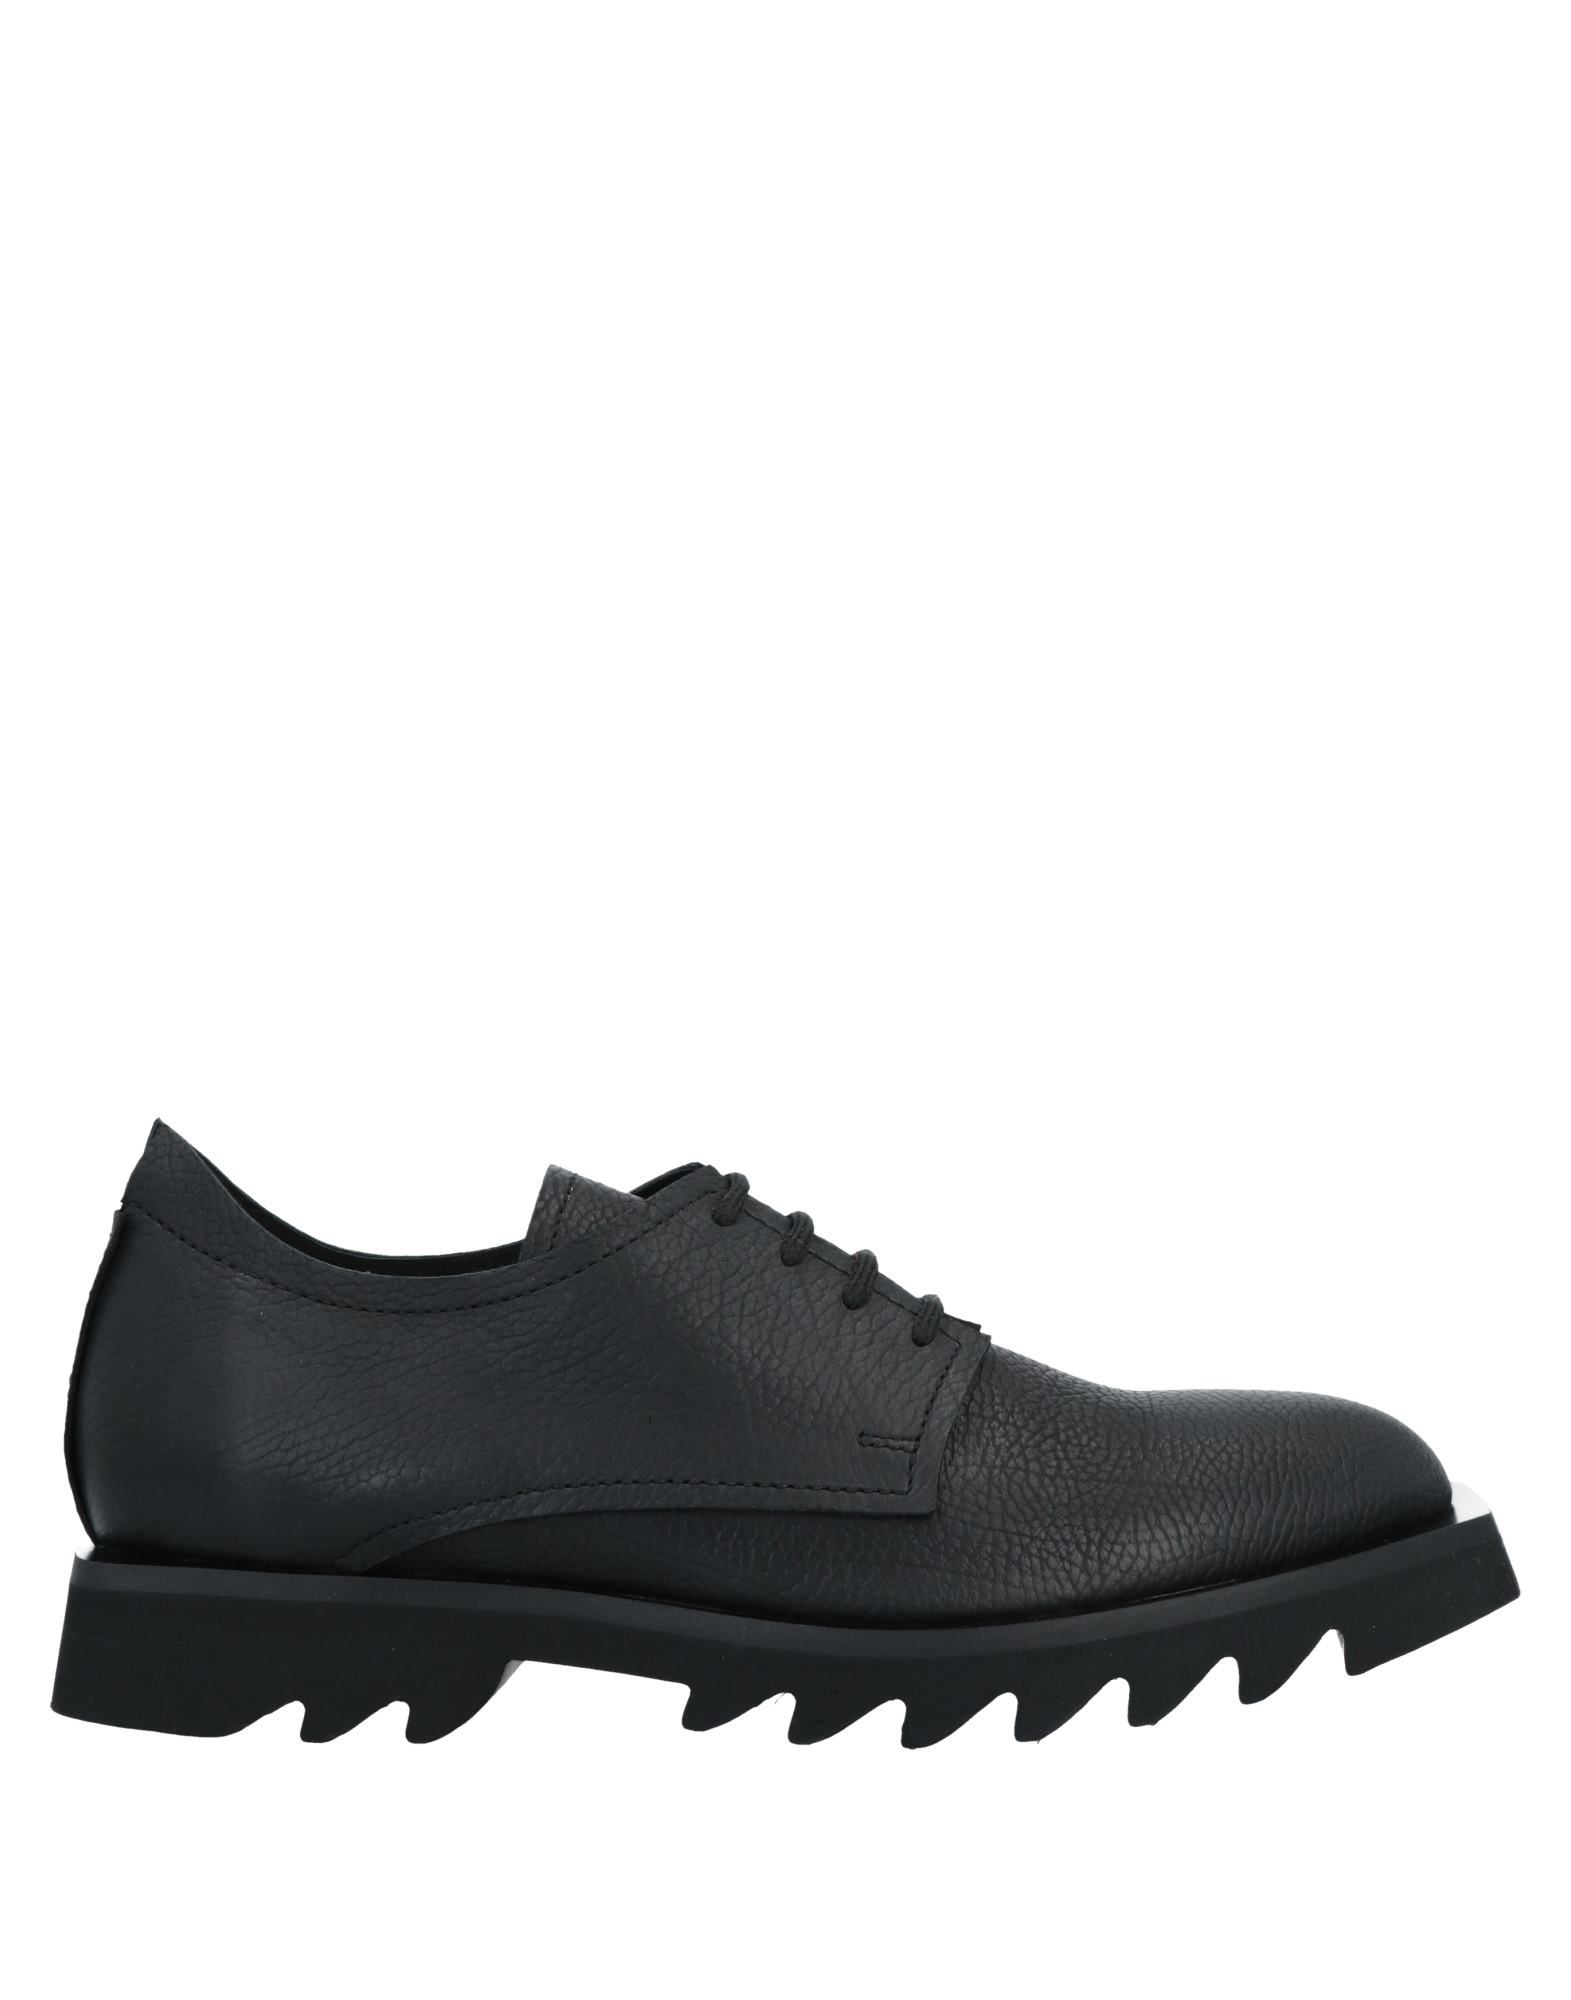 Attimonelli's Lace-up Shoes In Black